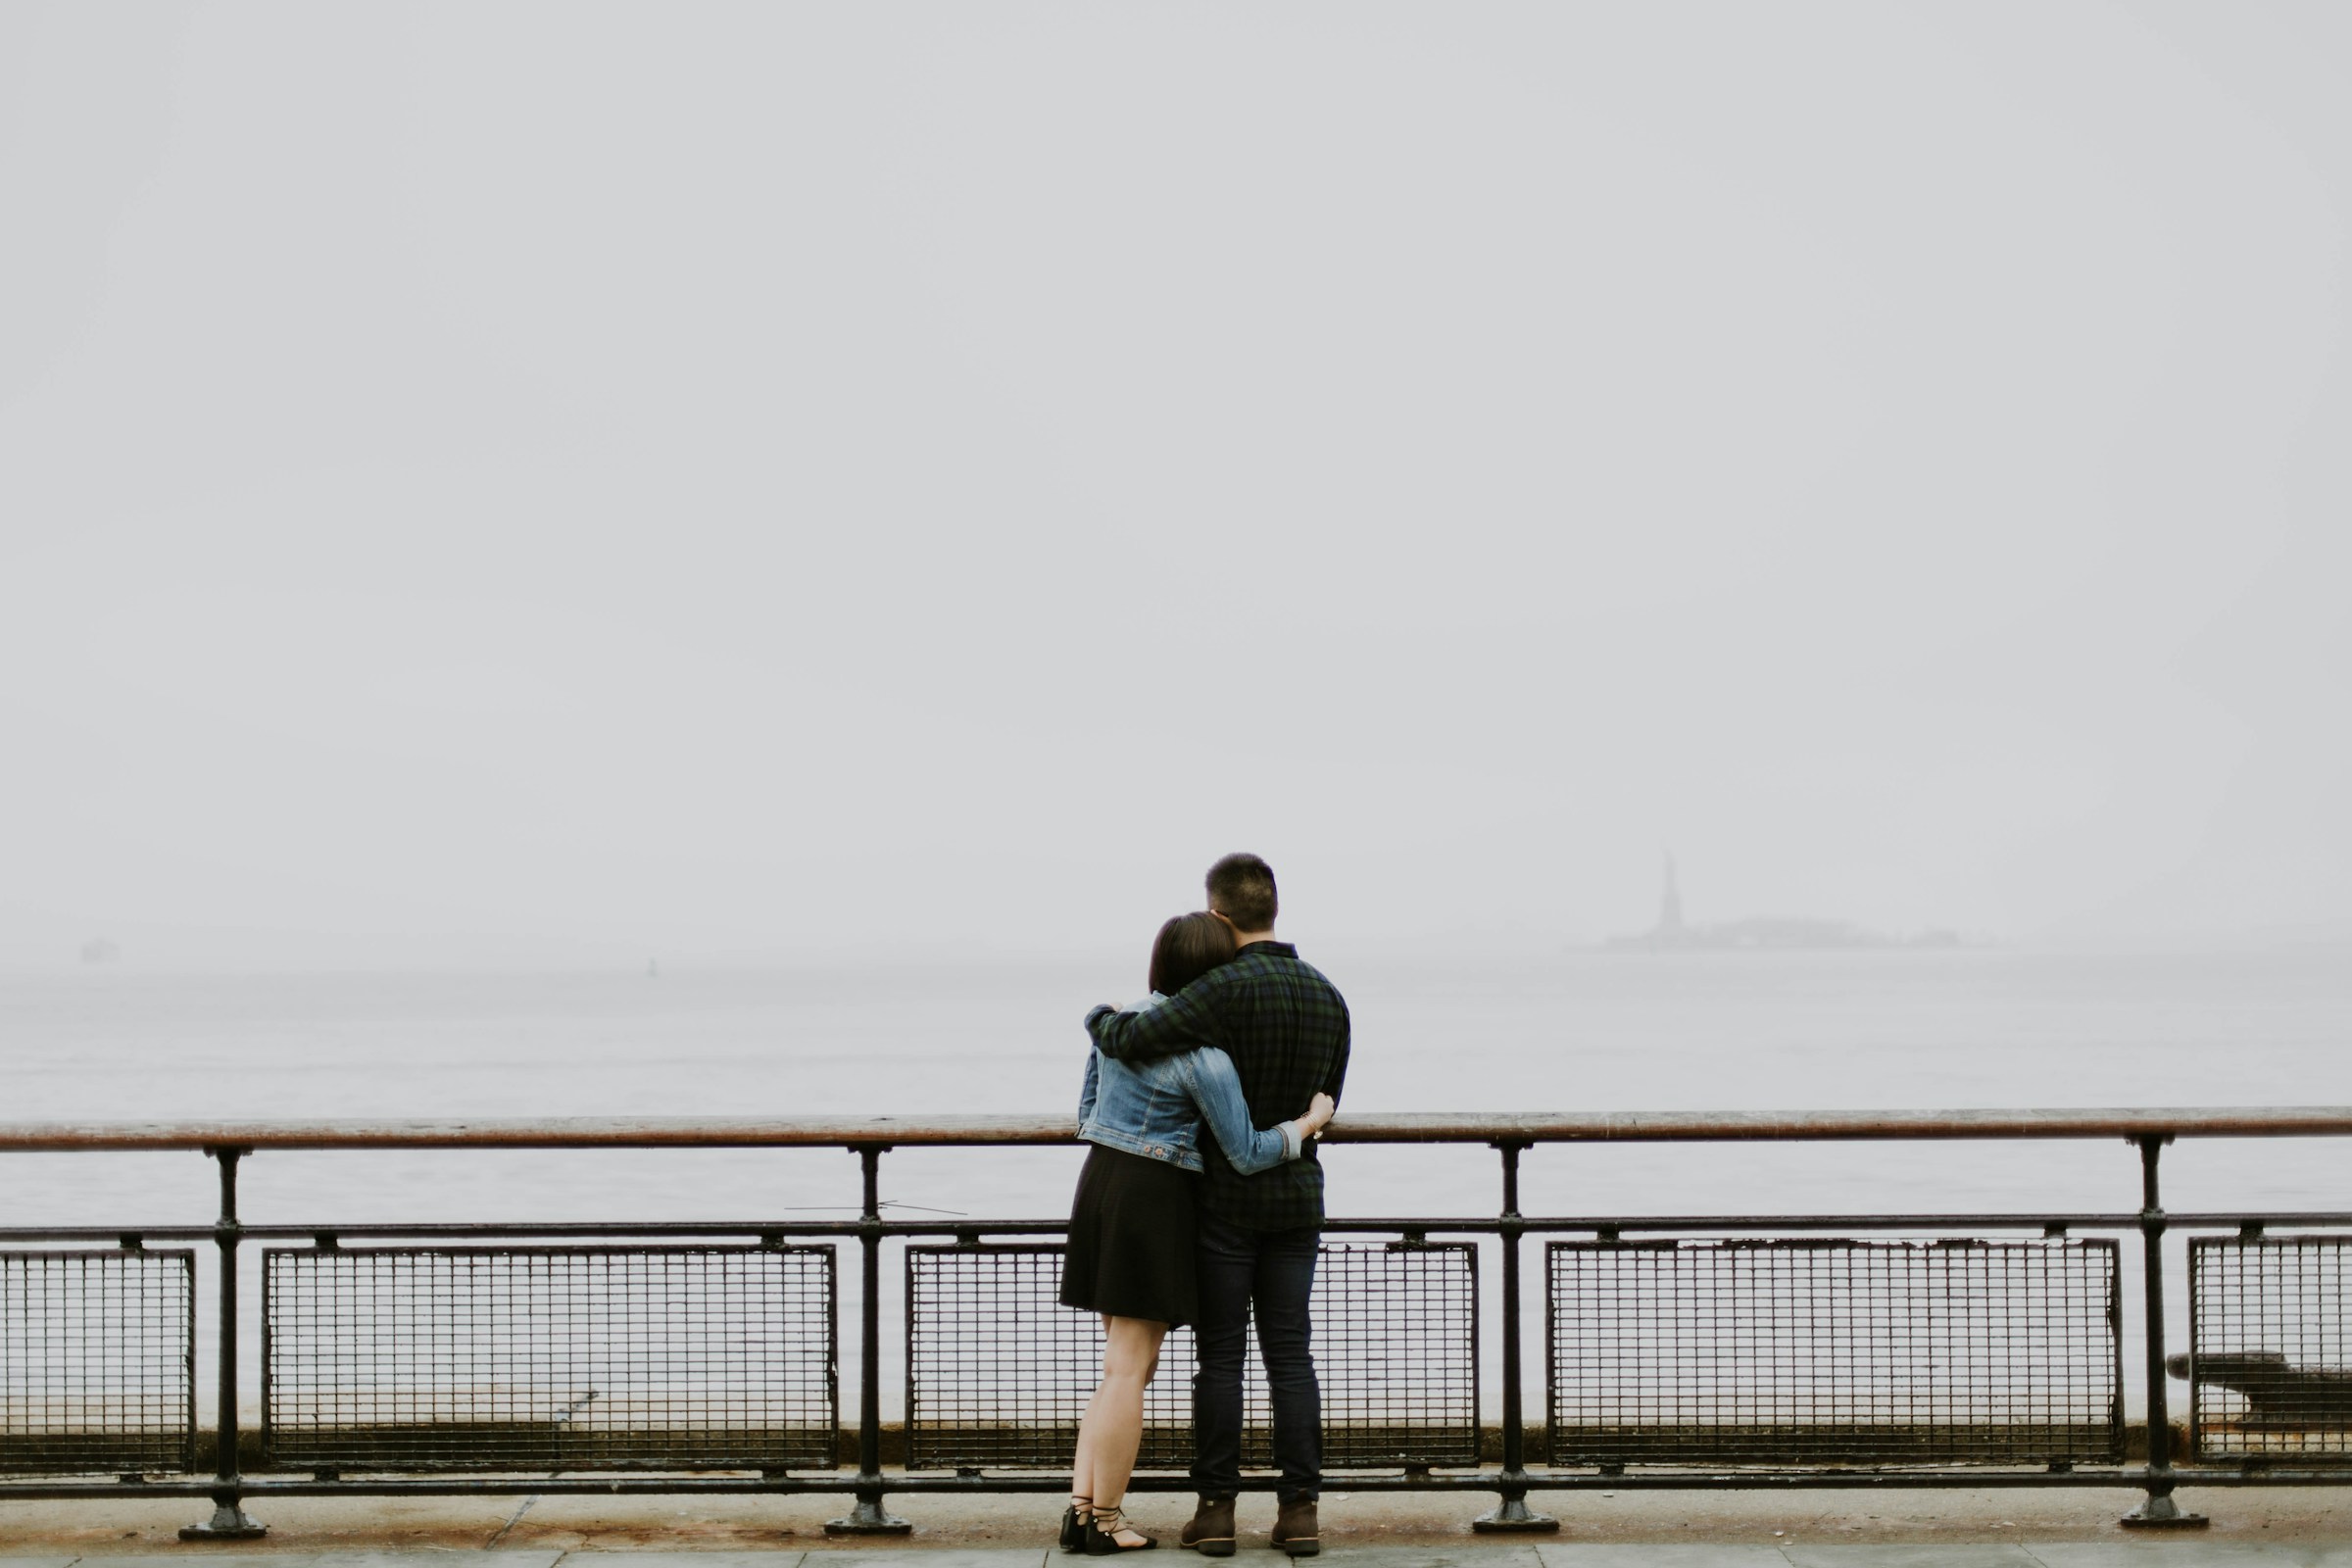 A couple embracing | Source: Unsplash